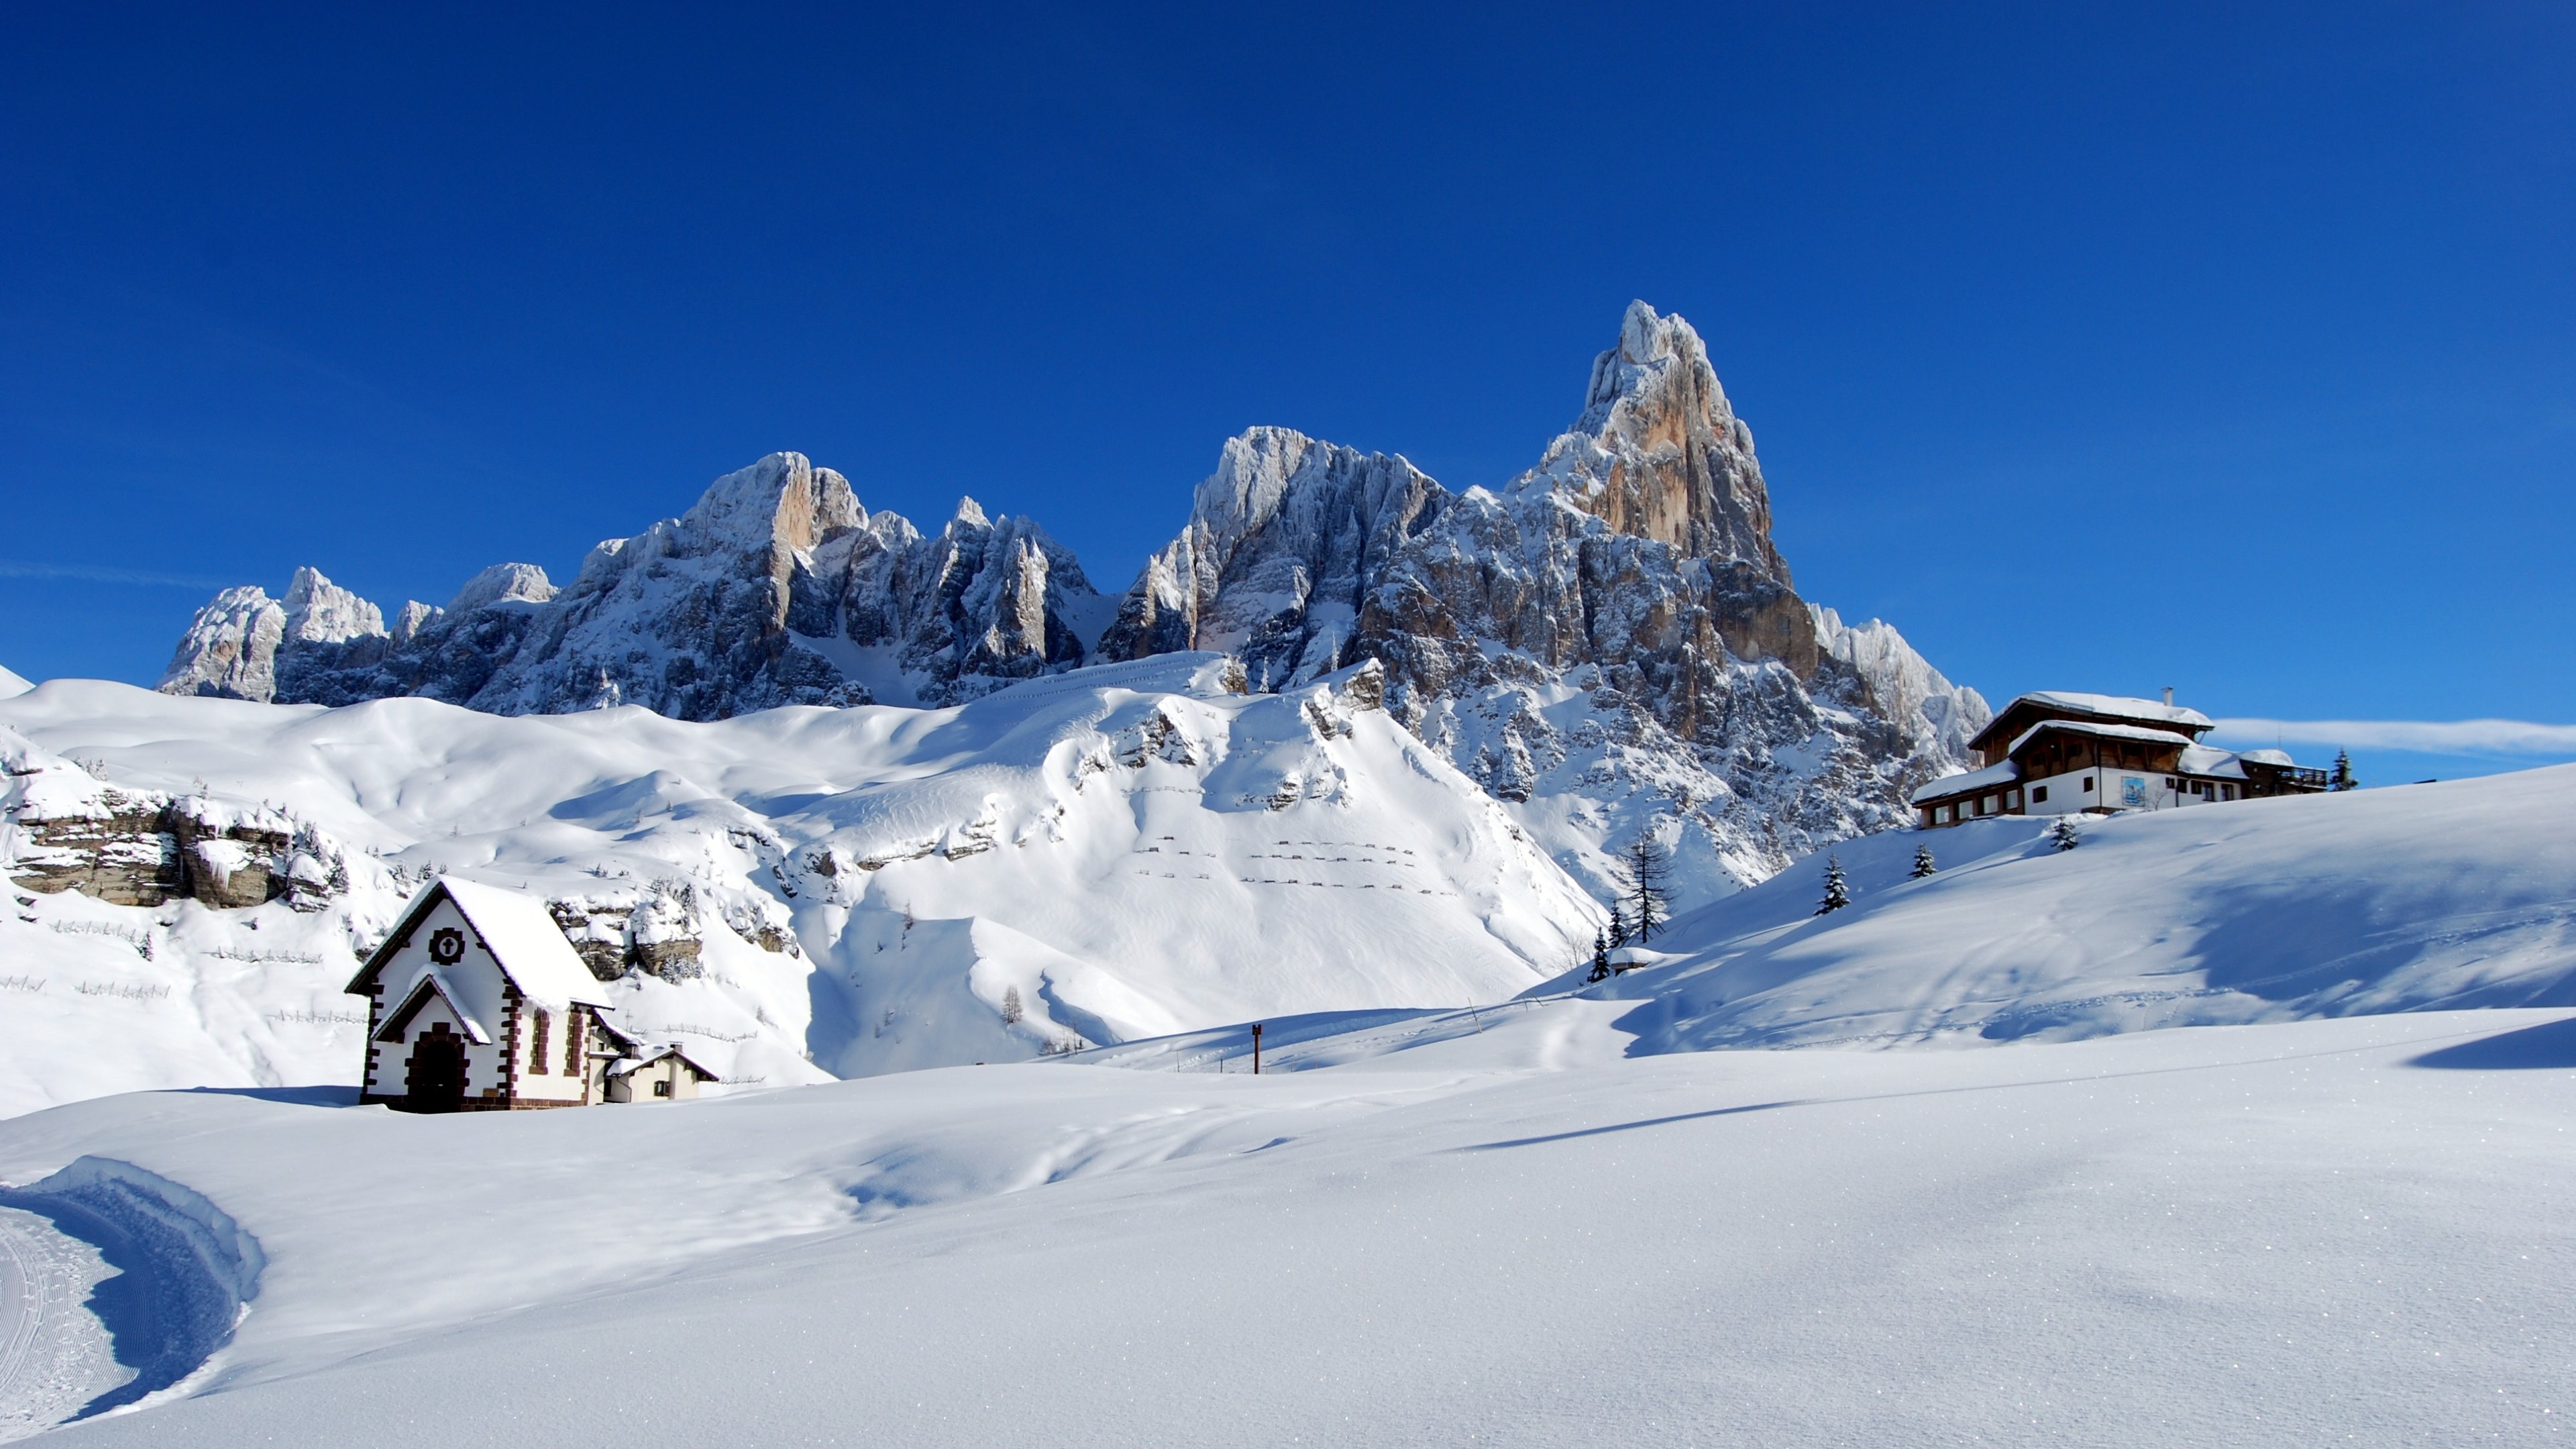 Dolomites Alps Italy Winter Snow HD Wallpaper 4k